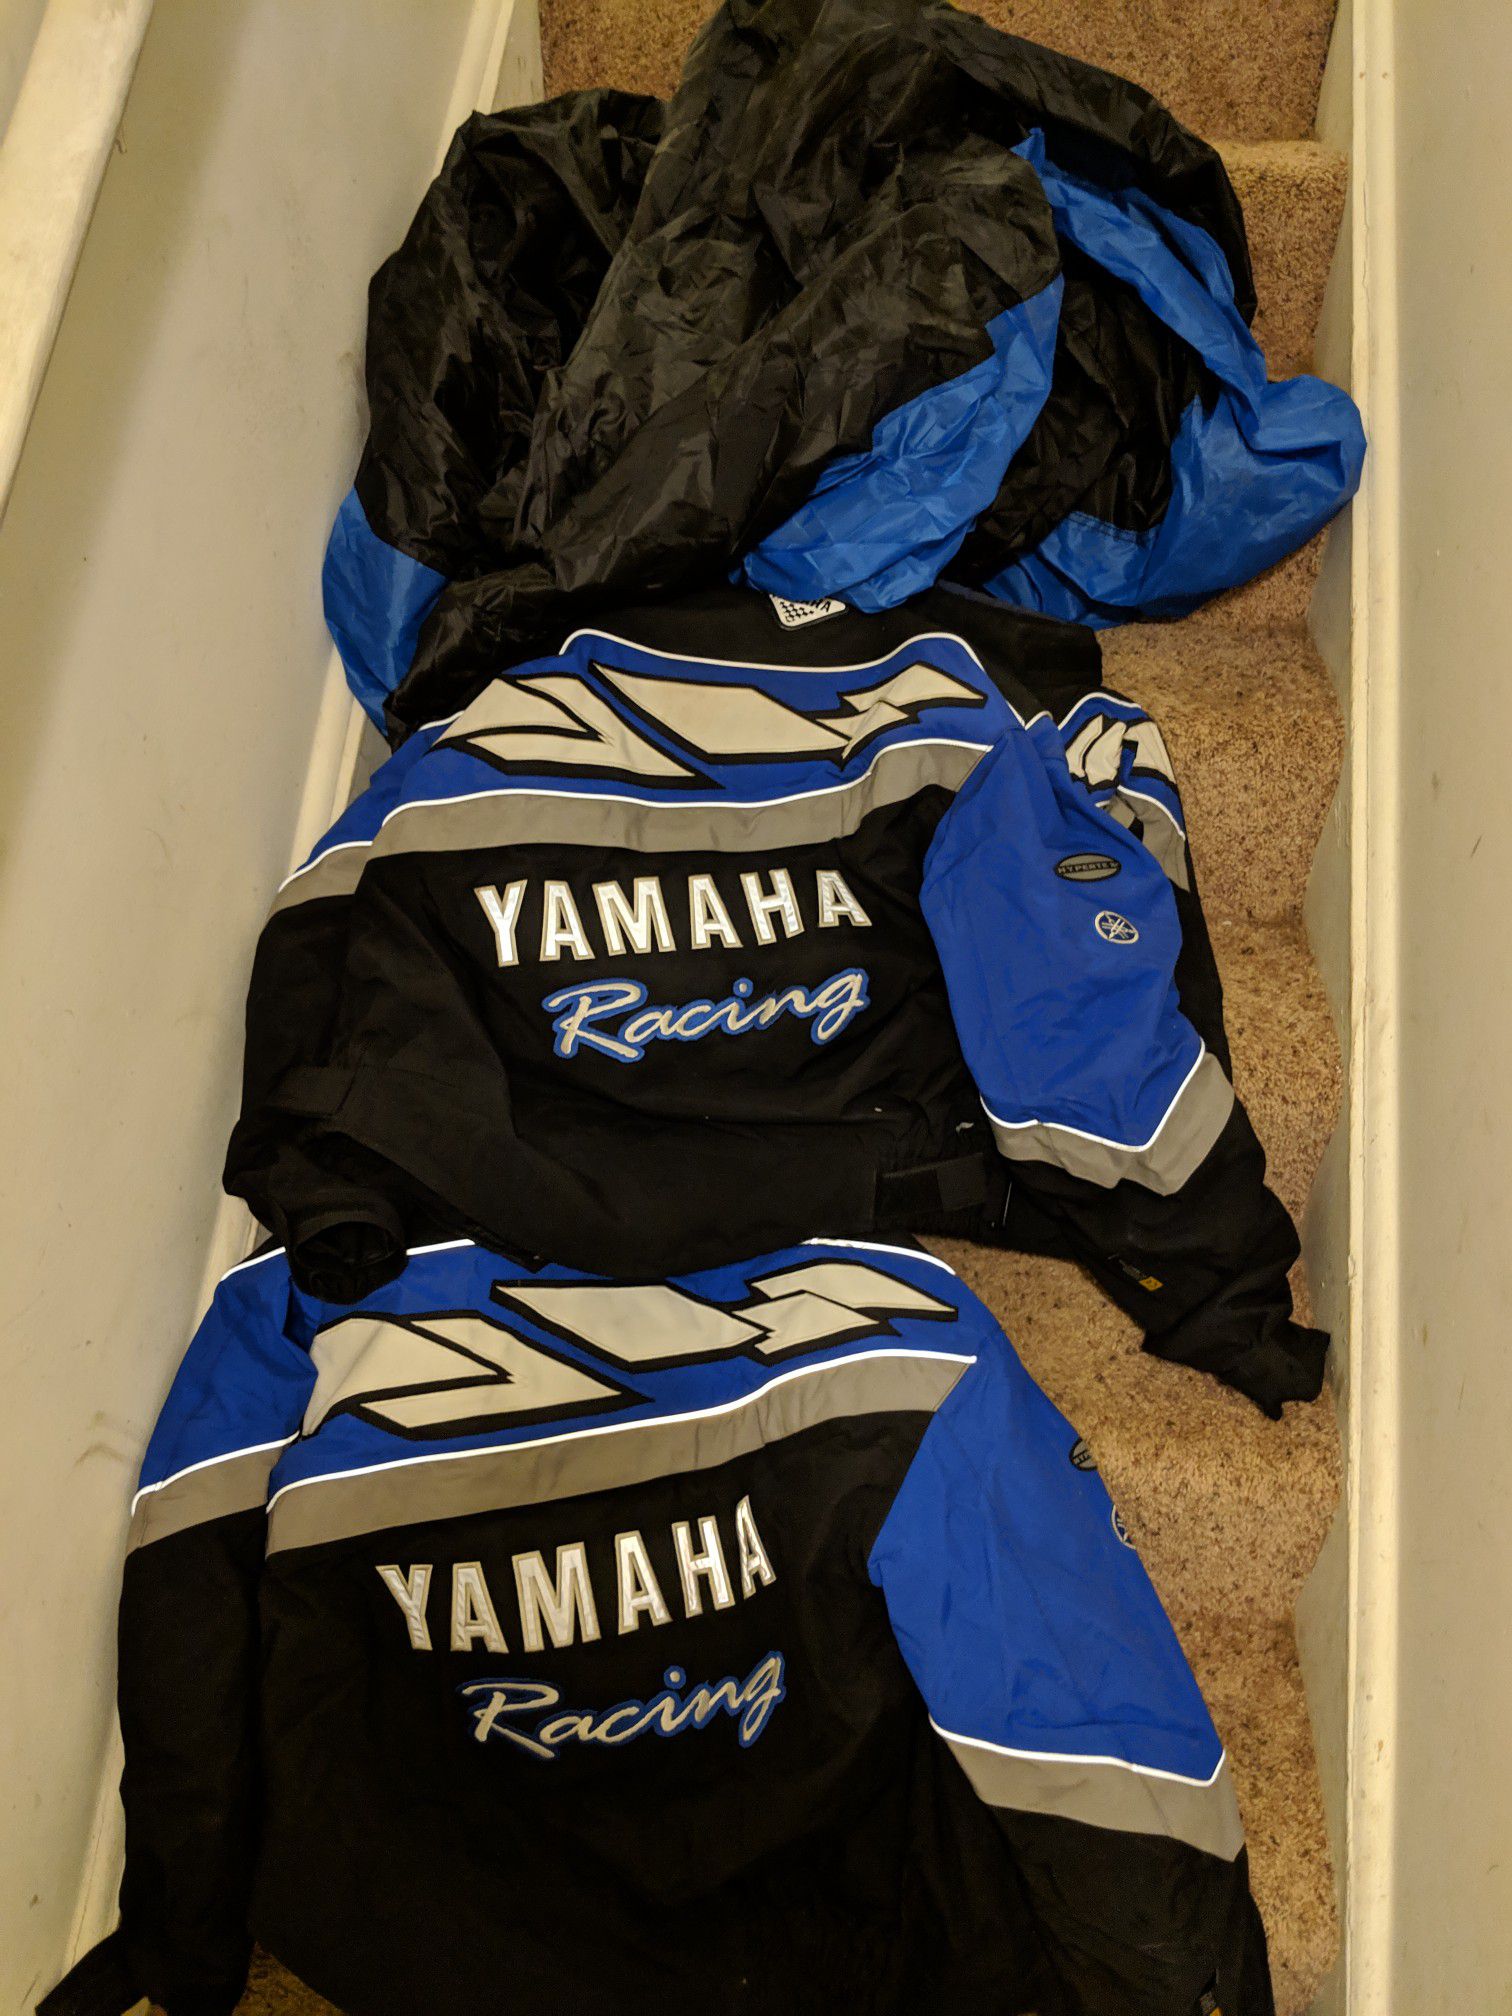 Yamaha racing armored motorcycle jackets